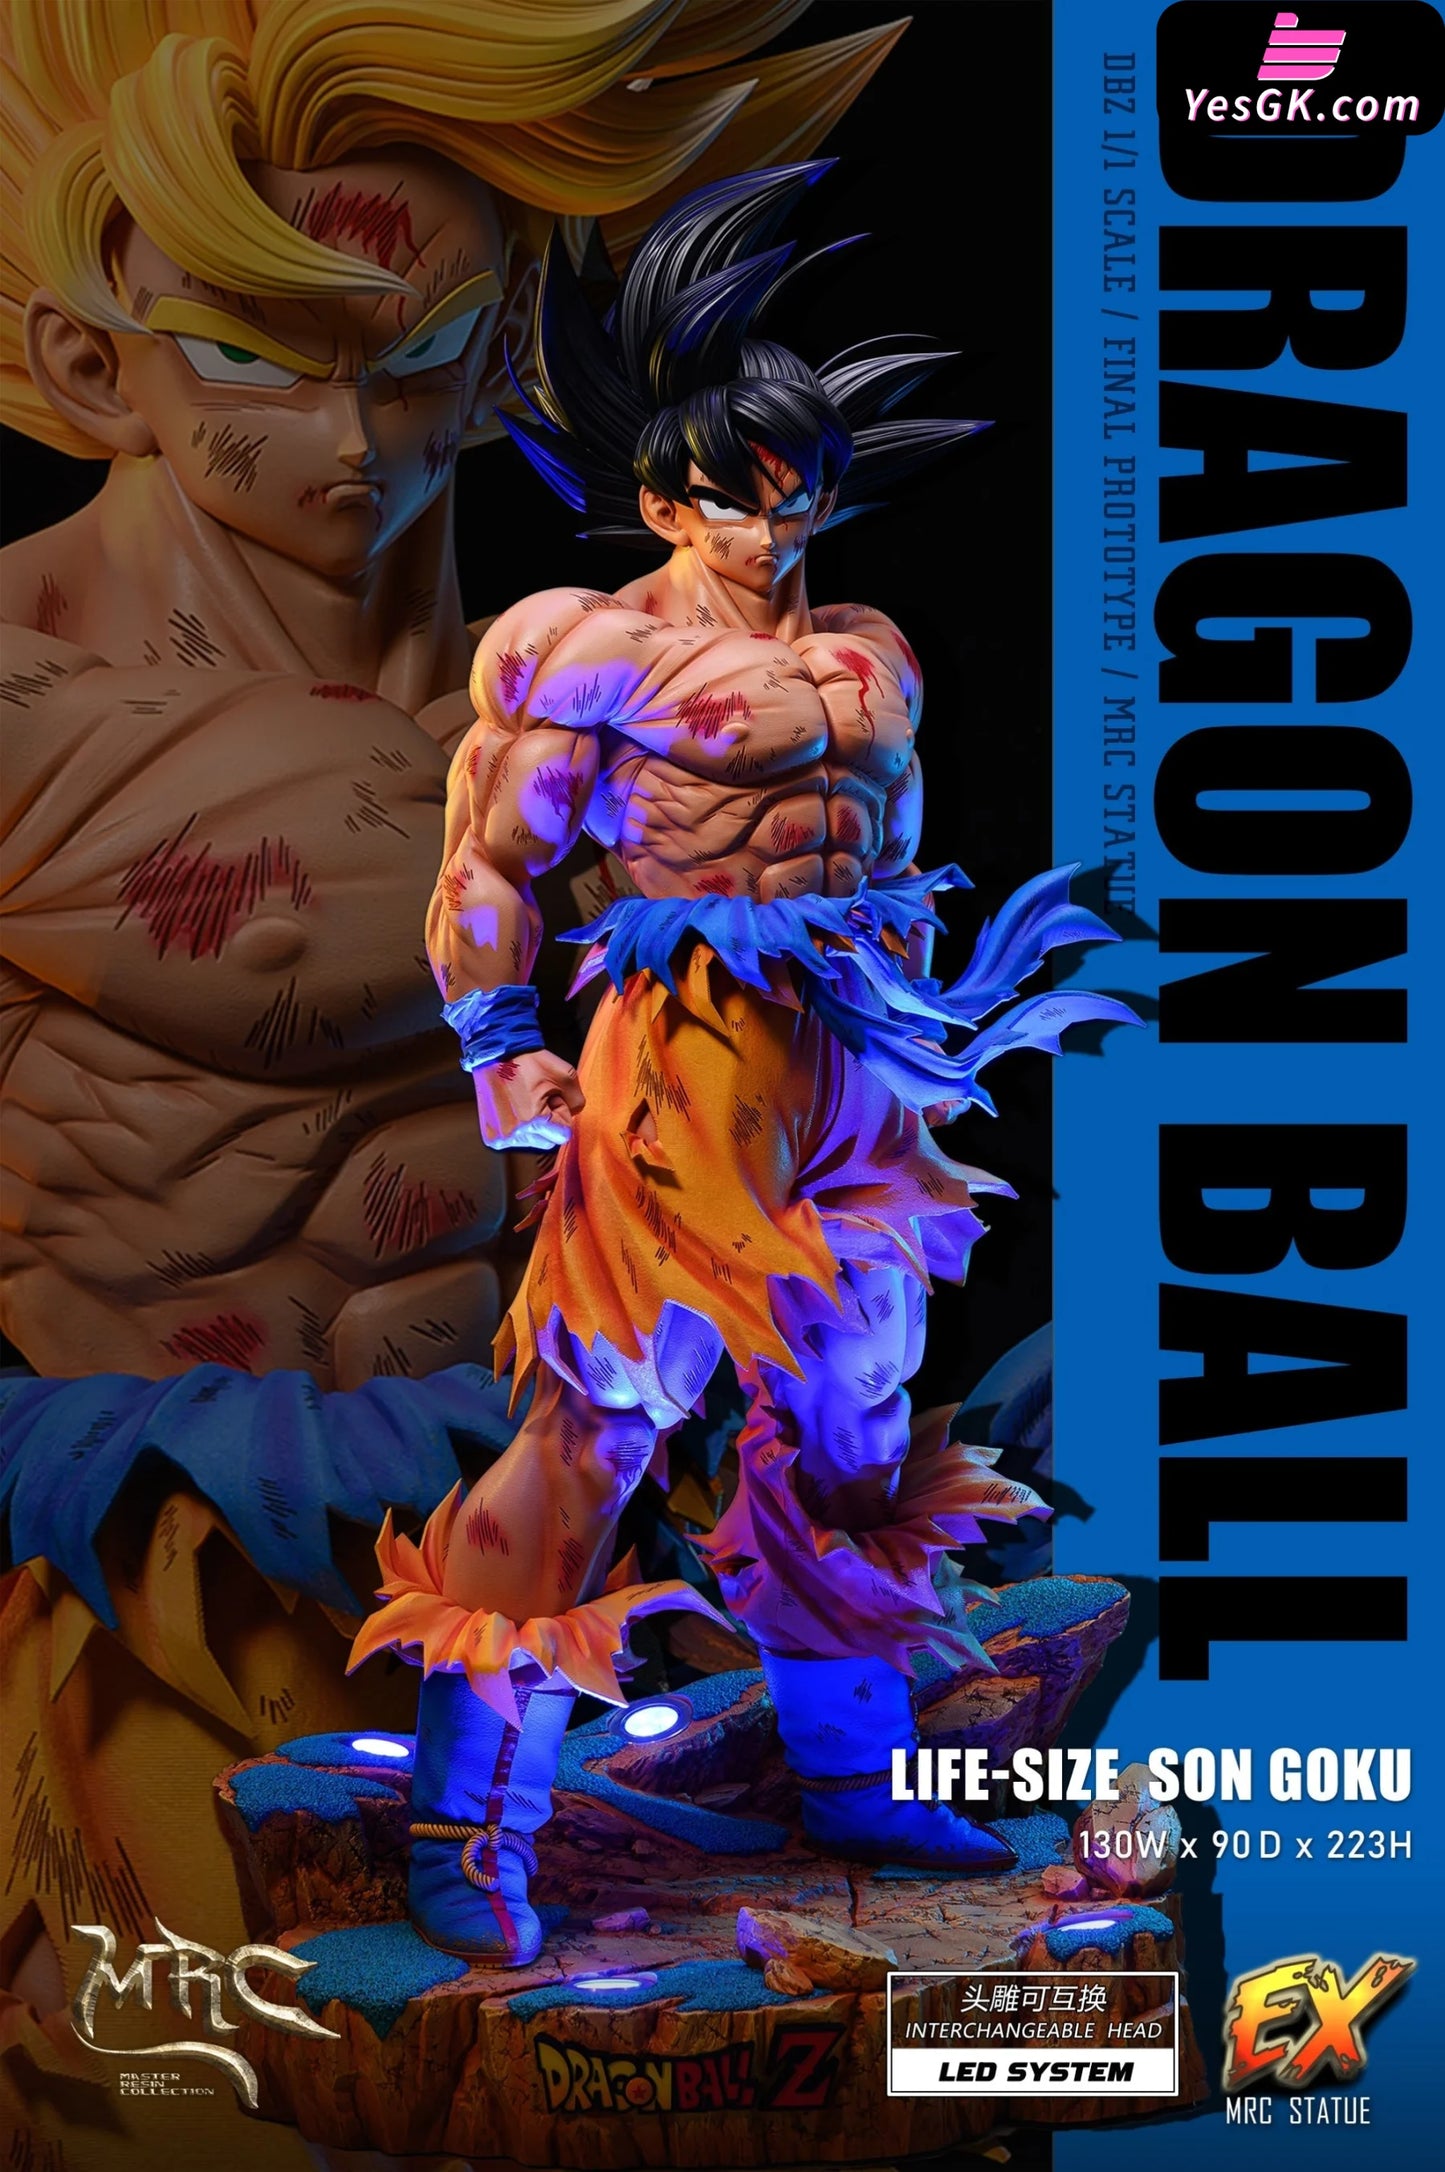 Dragon Ball 1/1 Life Size Son Goku Statue - Mrc Studio [Pre-Order]